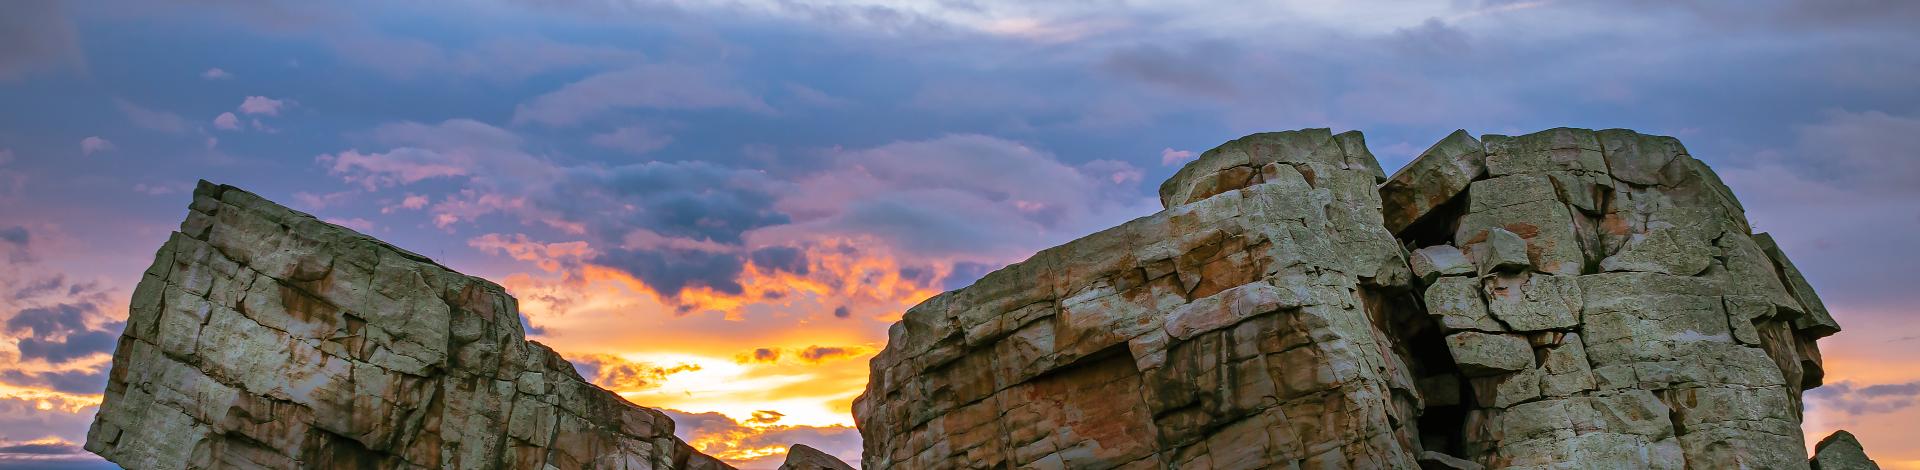 Big Rock at sunset, Image credit: Stephanie Janes